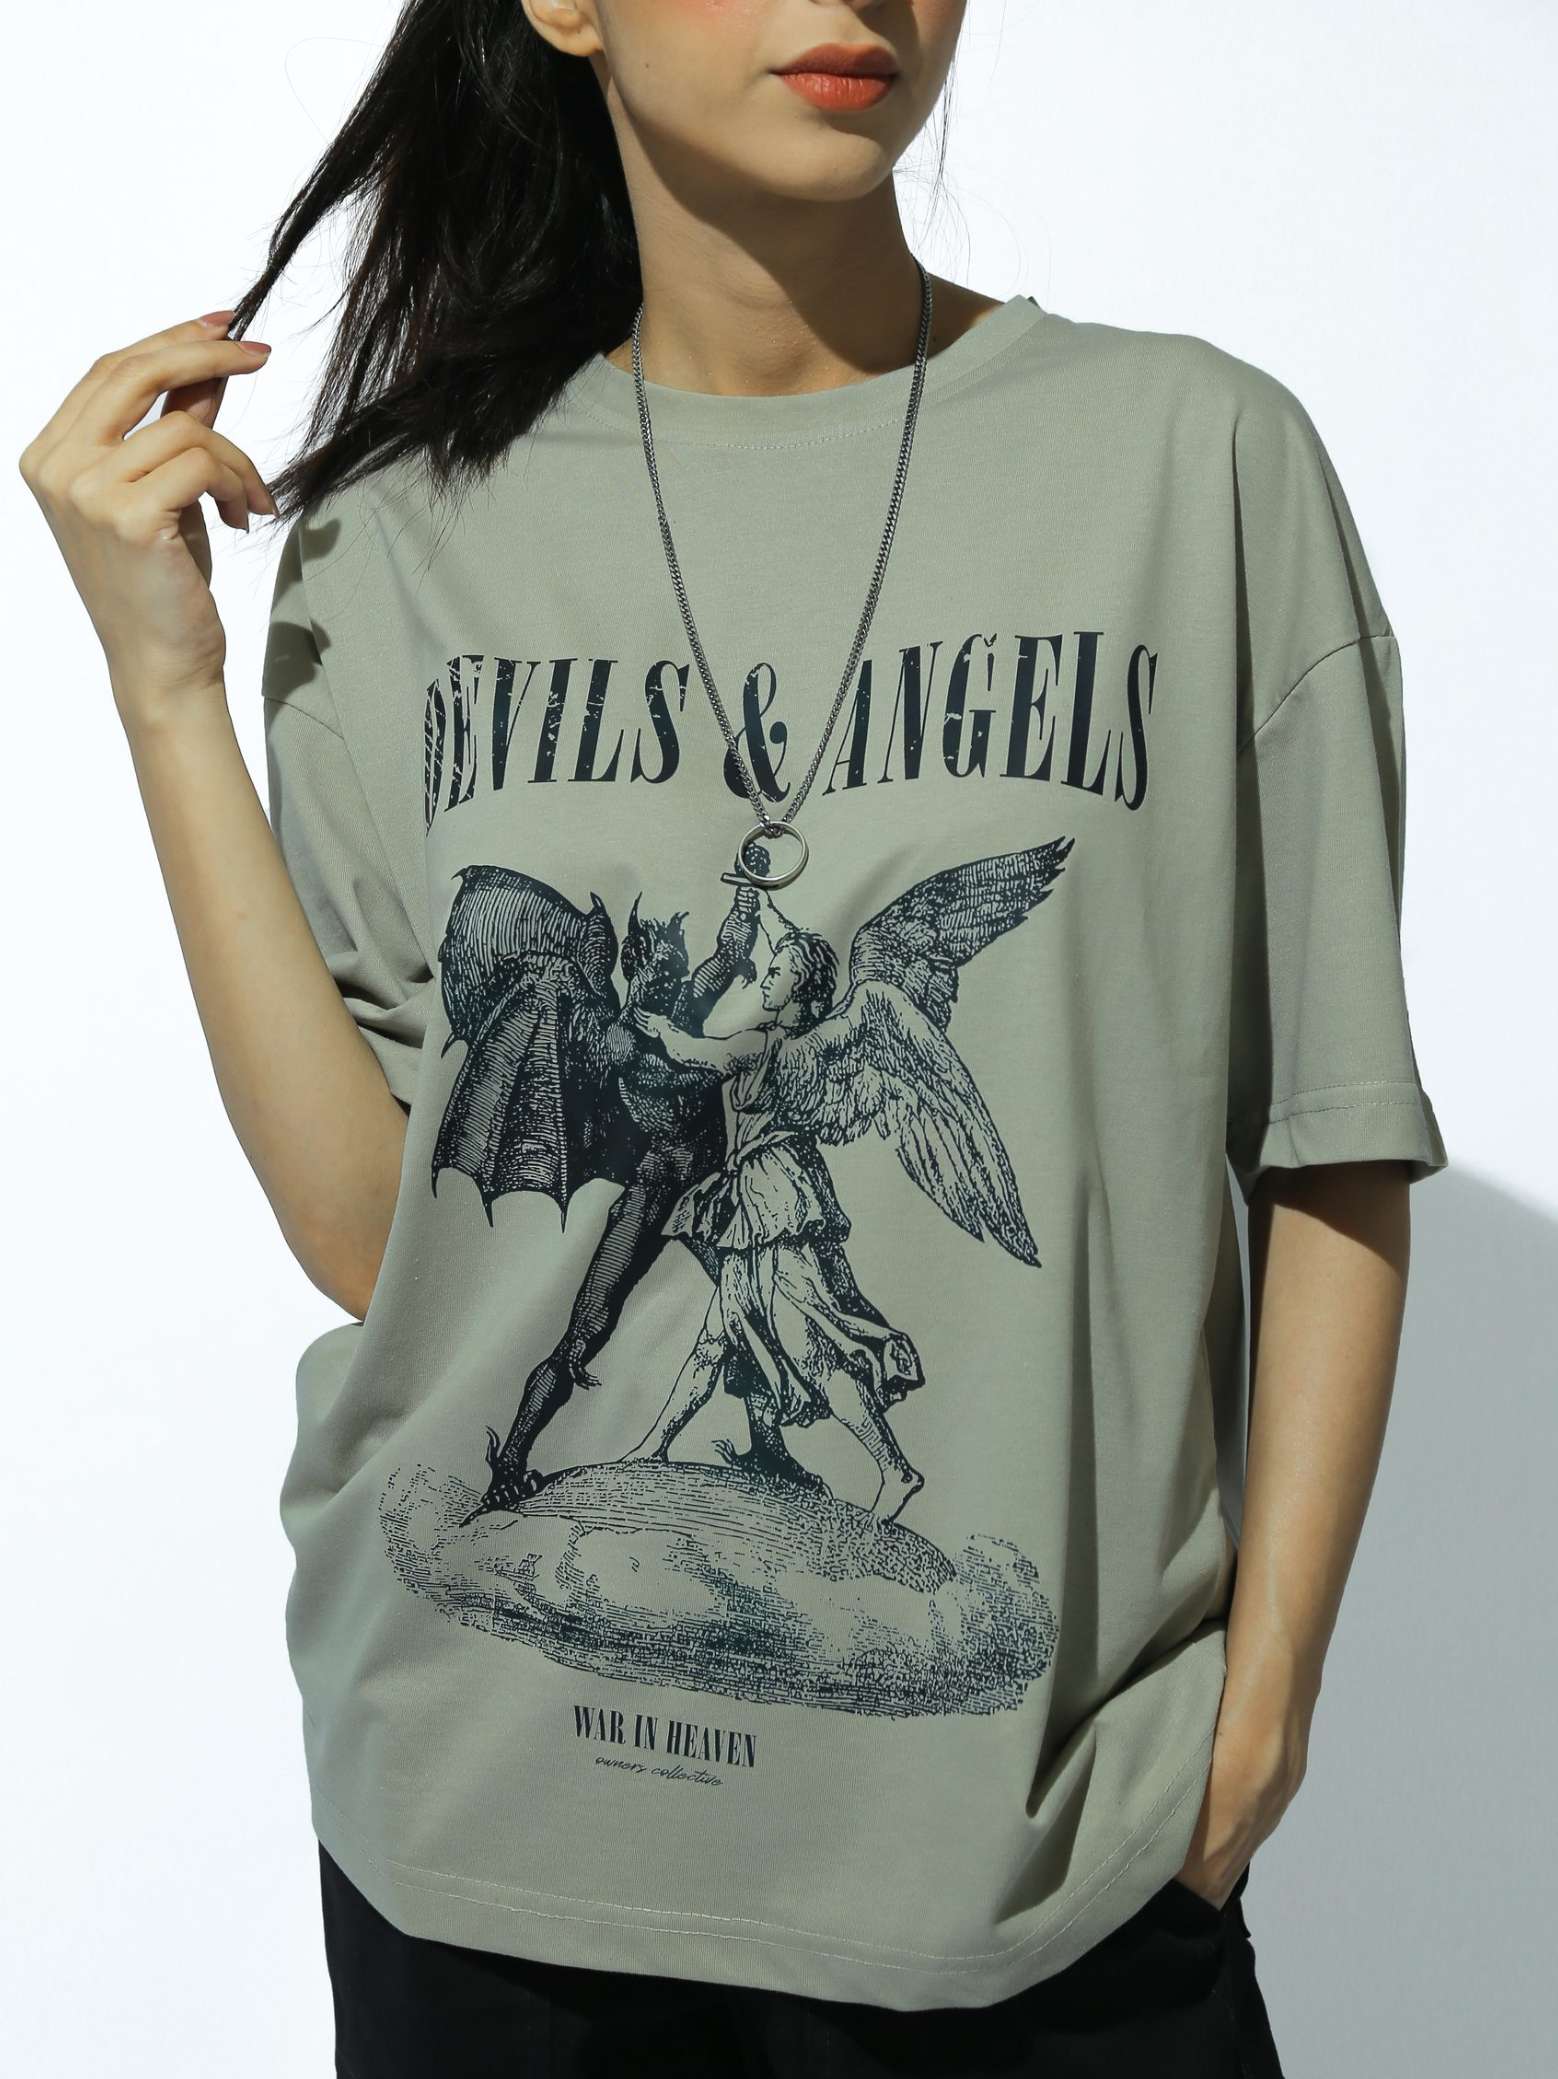 Devils & Angels